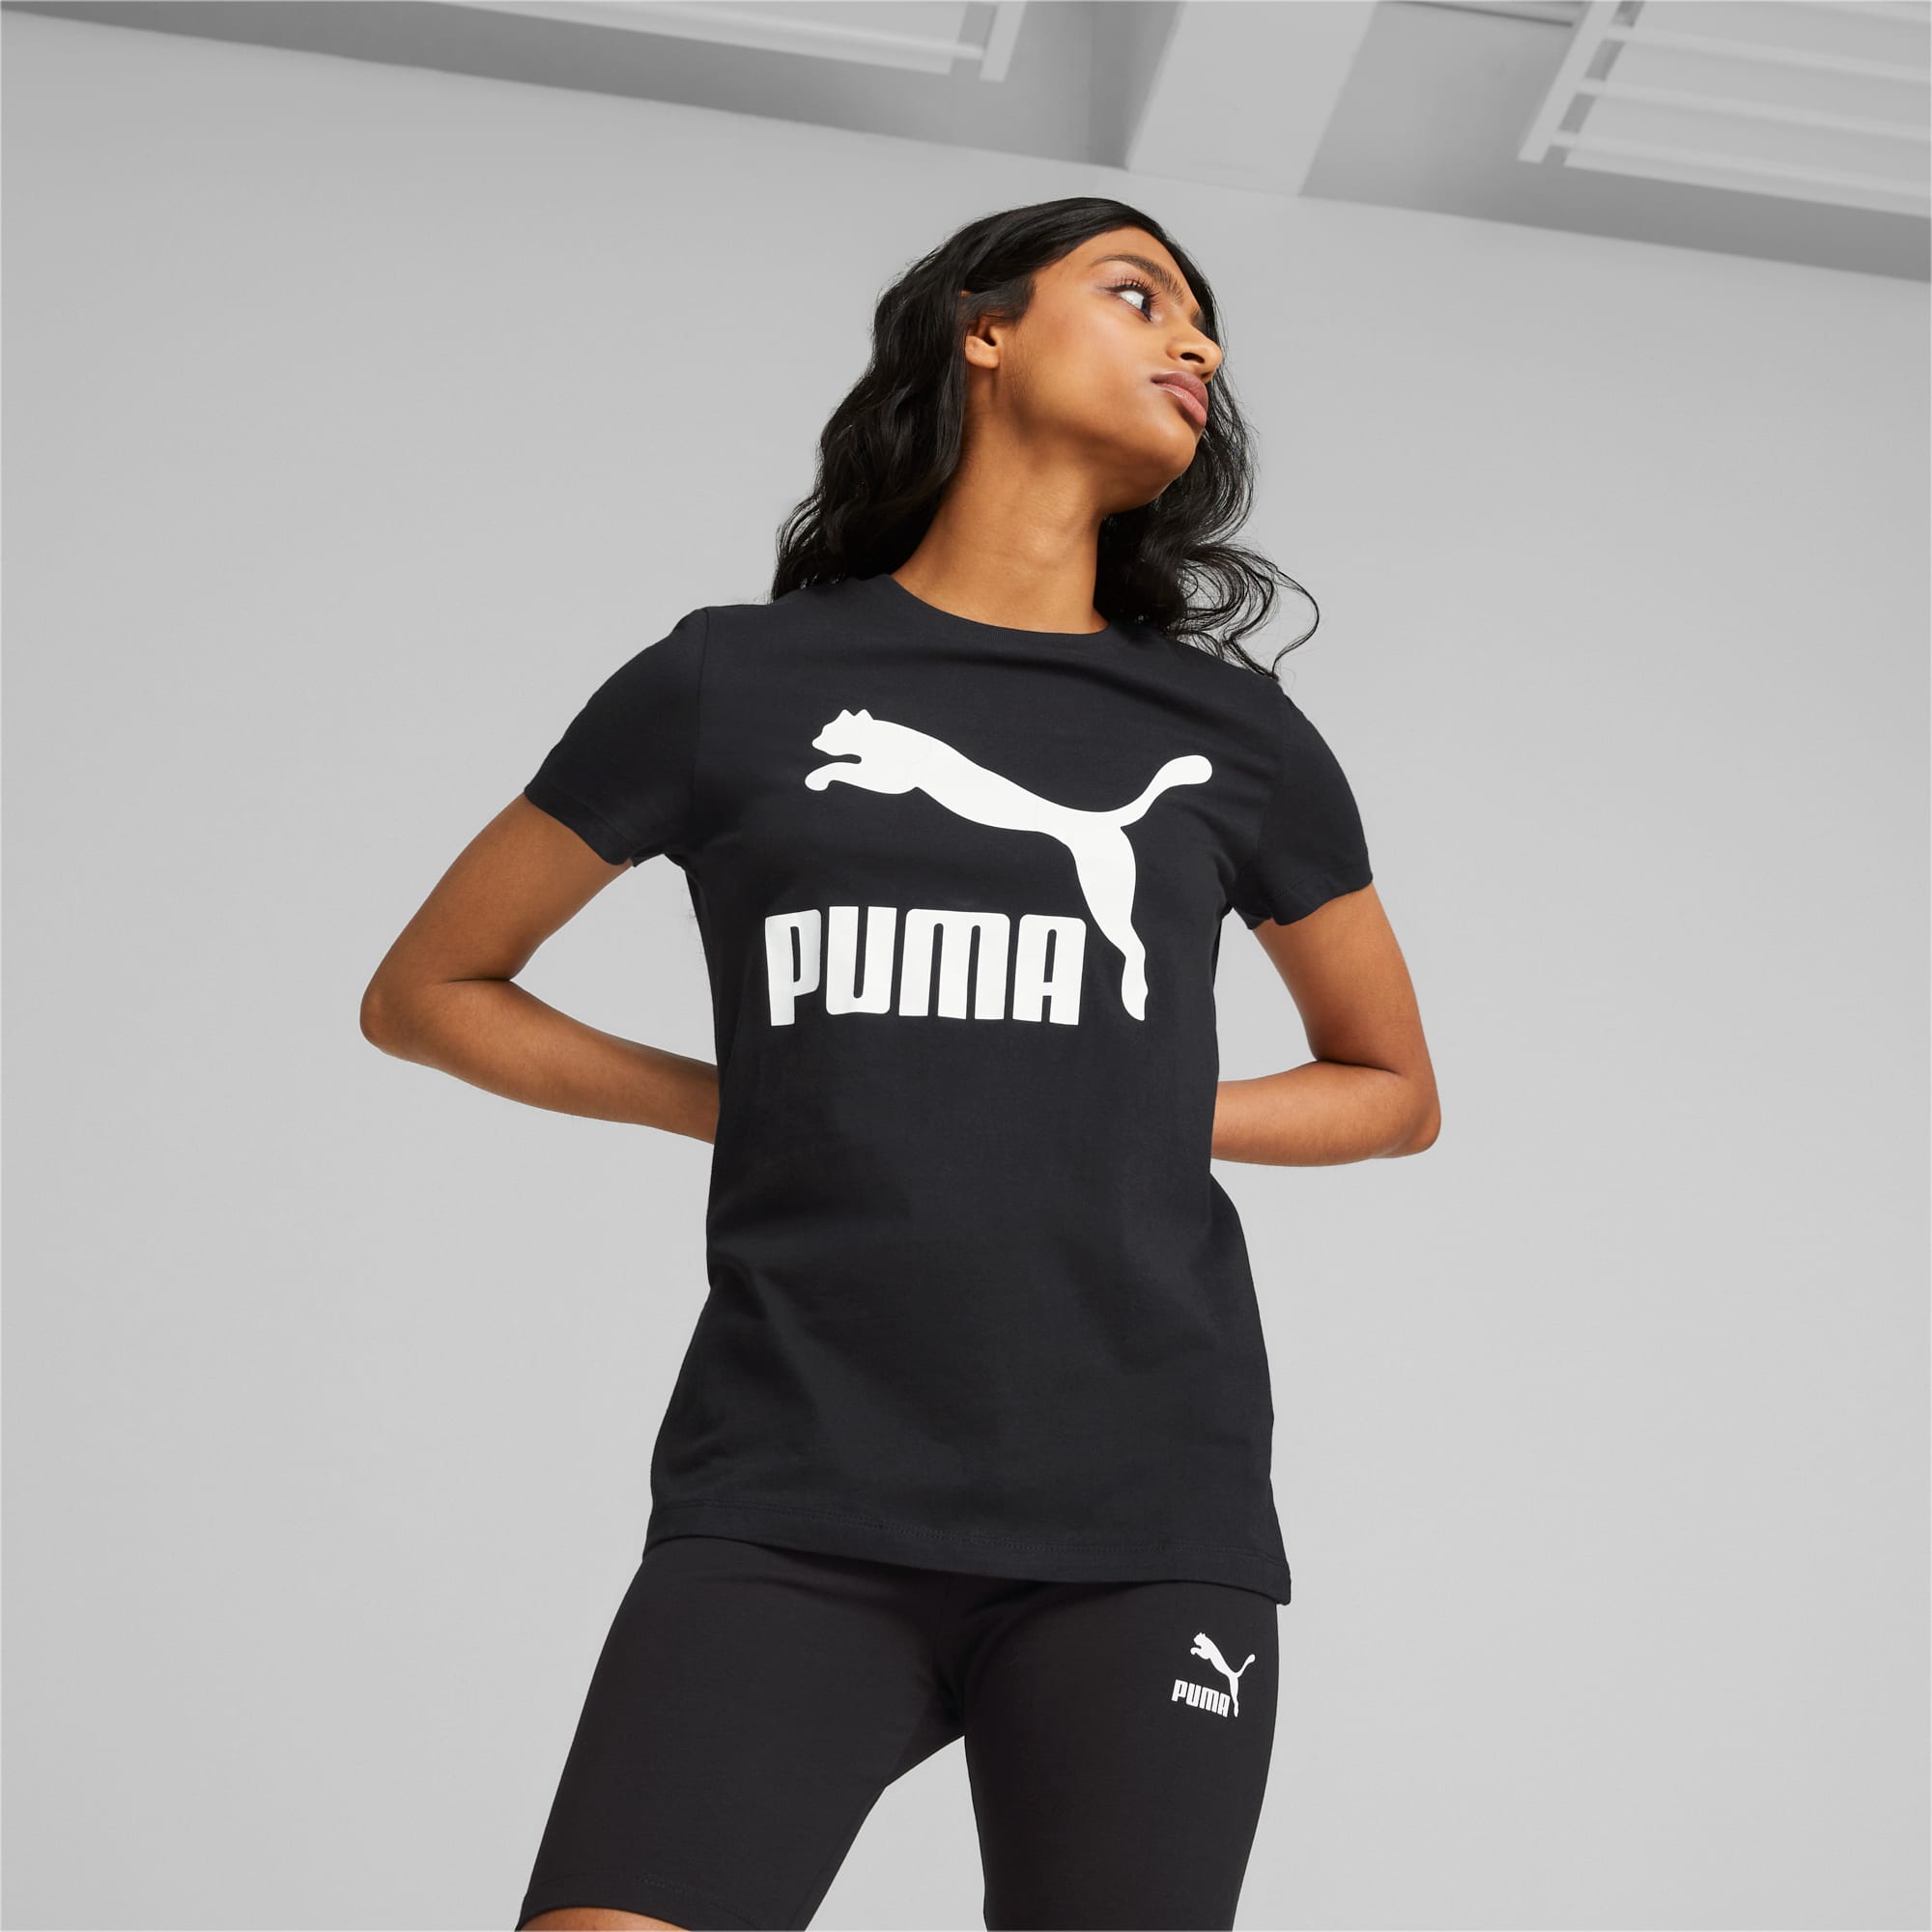 Camiseta Puma Better Mujer Gris